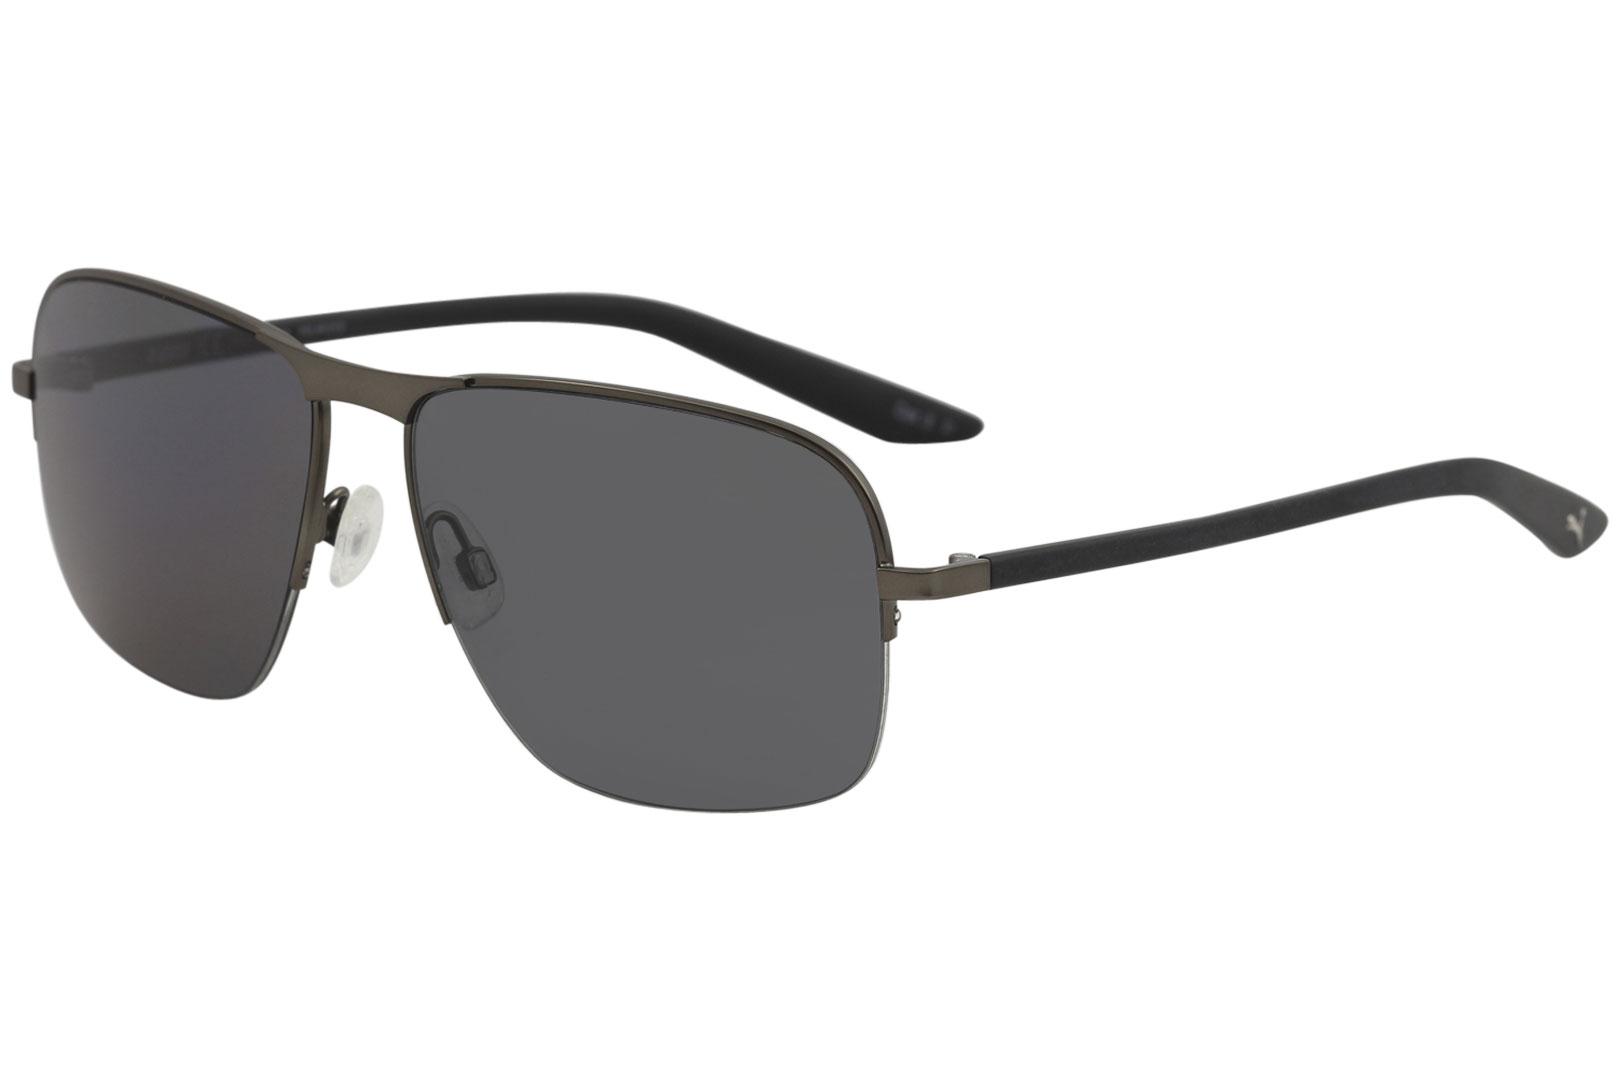 puma men's polarized sunglasses